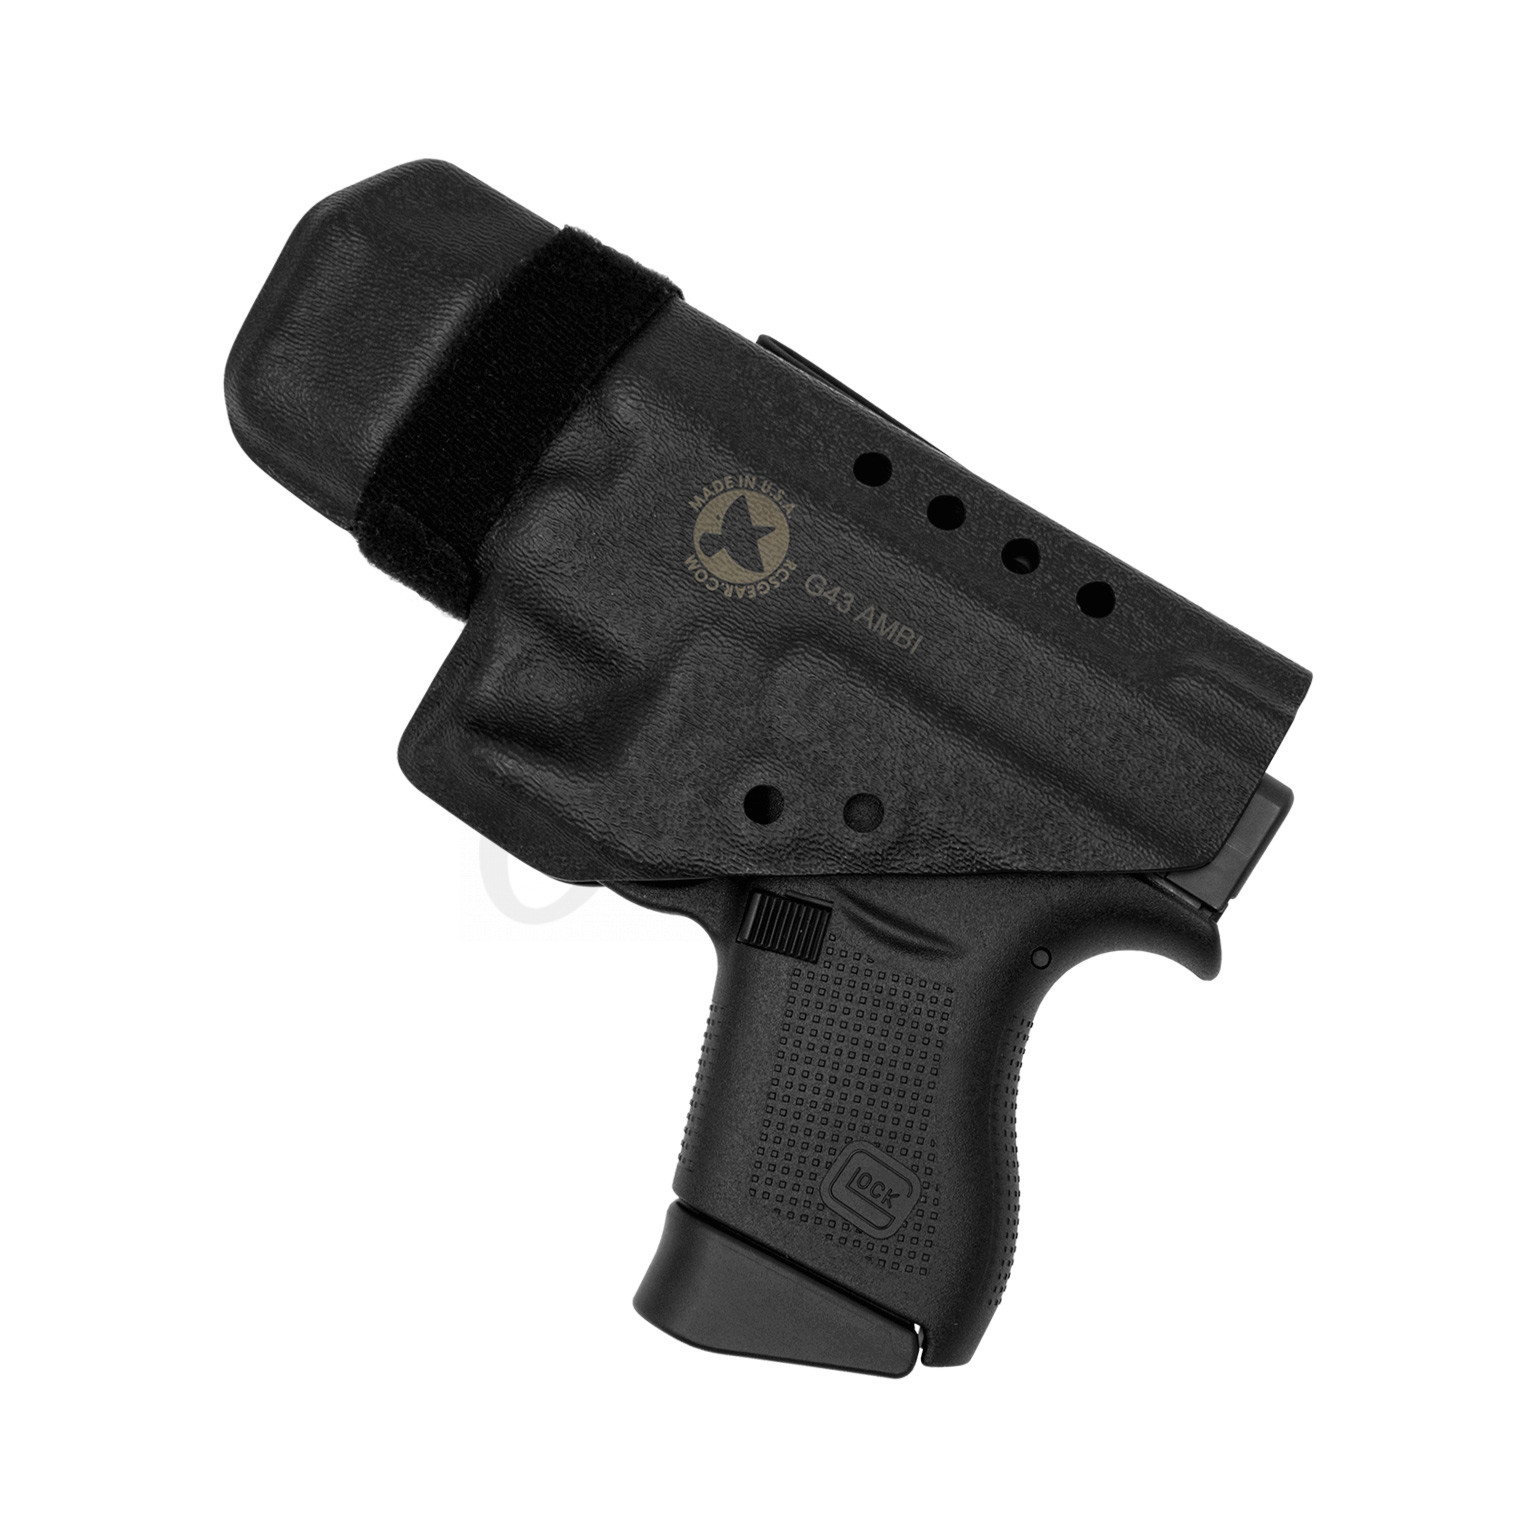 Raven Concealment Systems Morrigan IWB Kydex Ambi Holster Black for Glock 19 for sale online 